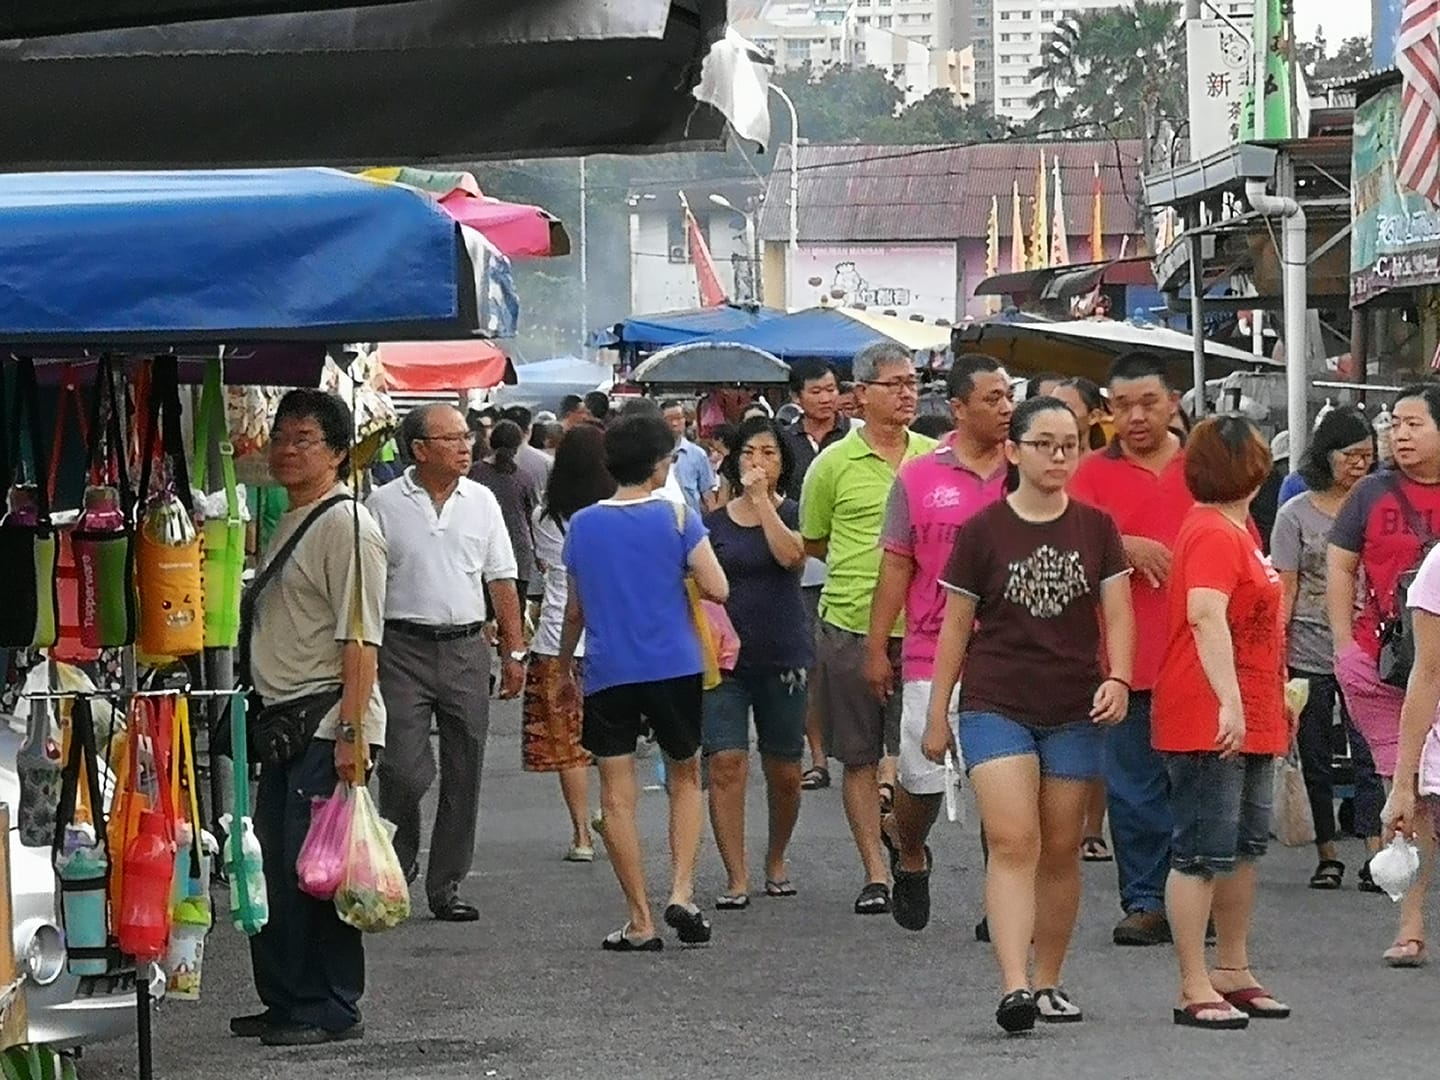 Jelutong Market on Saturday morning